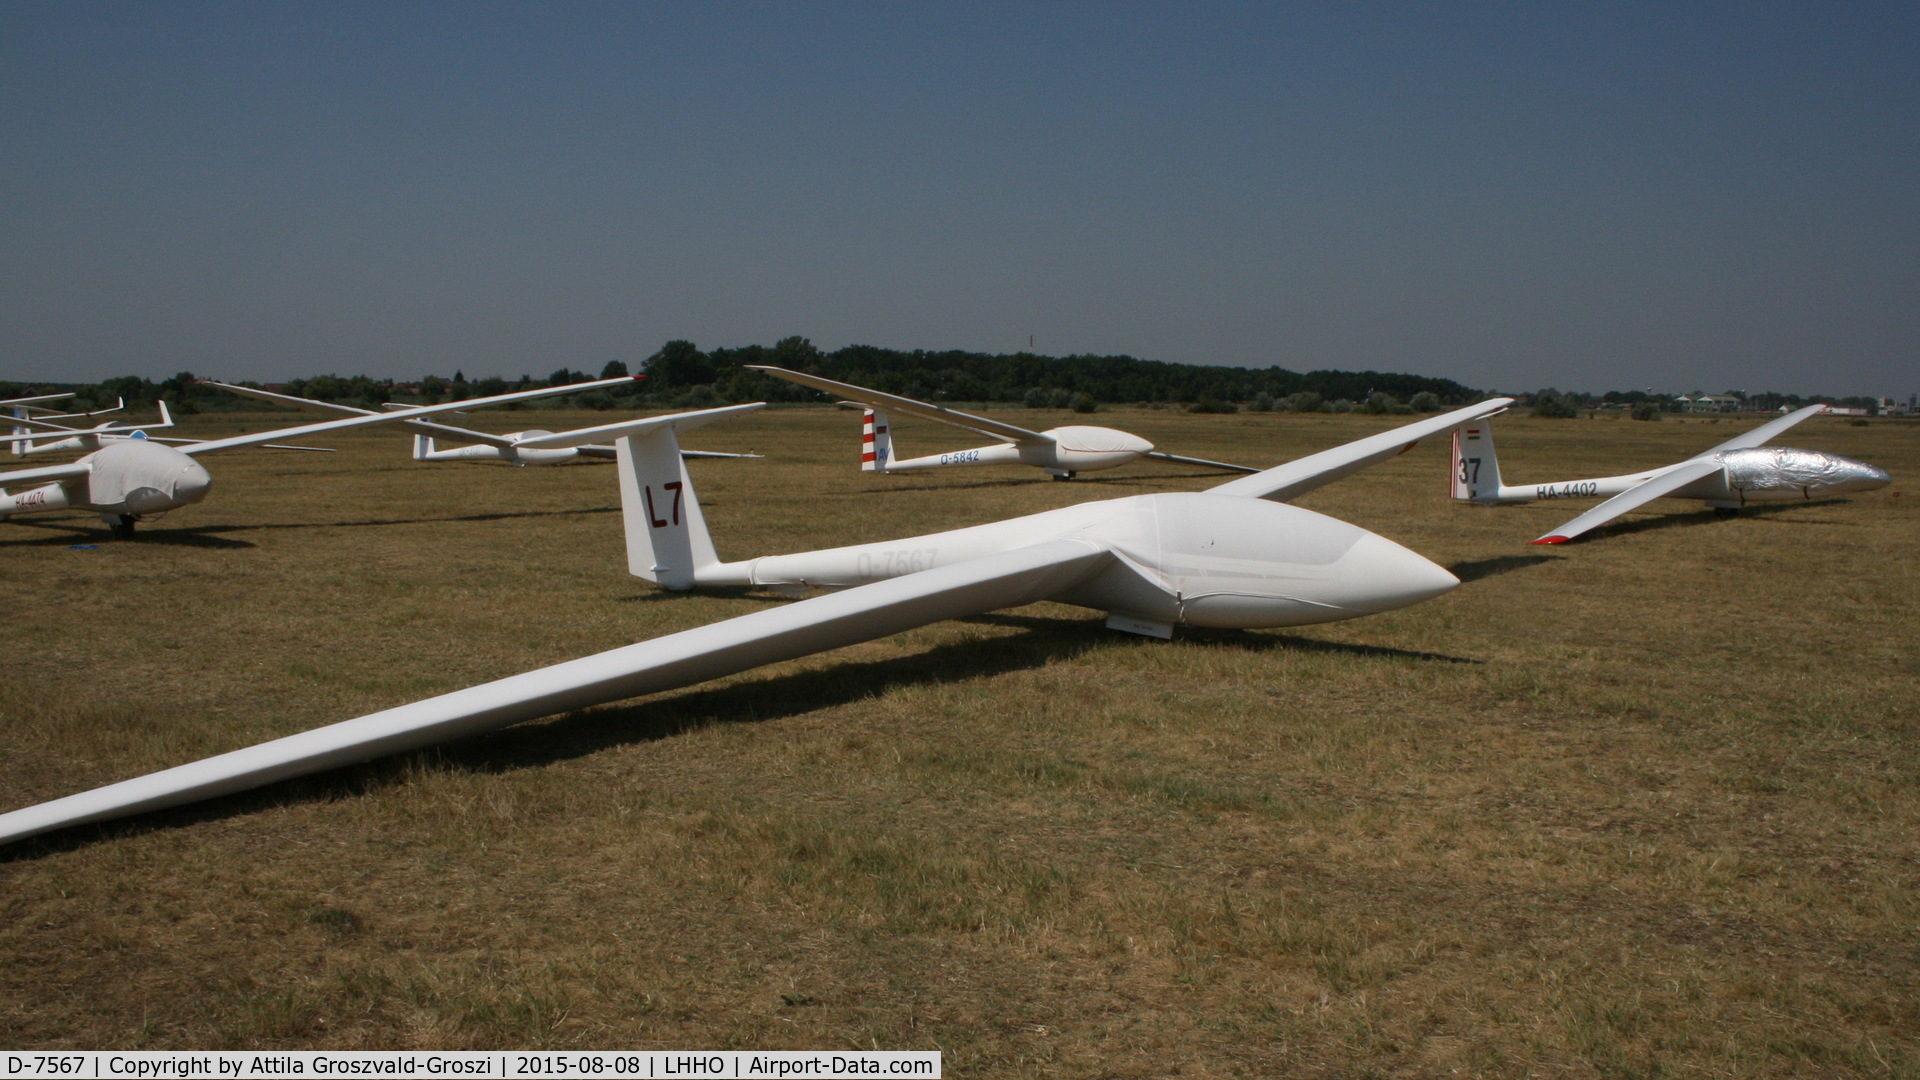 D-7567, 1978 Schleicher ASW 19B C/N 19134, Hajdúszoboszló Airport, Hungary - 60. Hungary Gliding National Championship and third Civis Thermal Cup, 2015